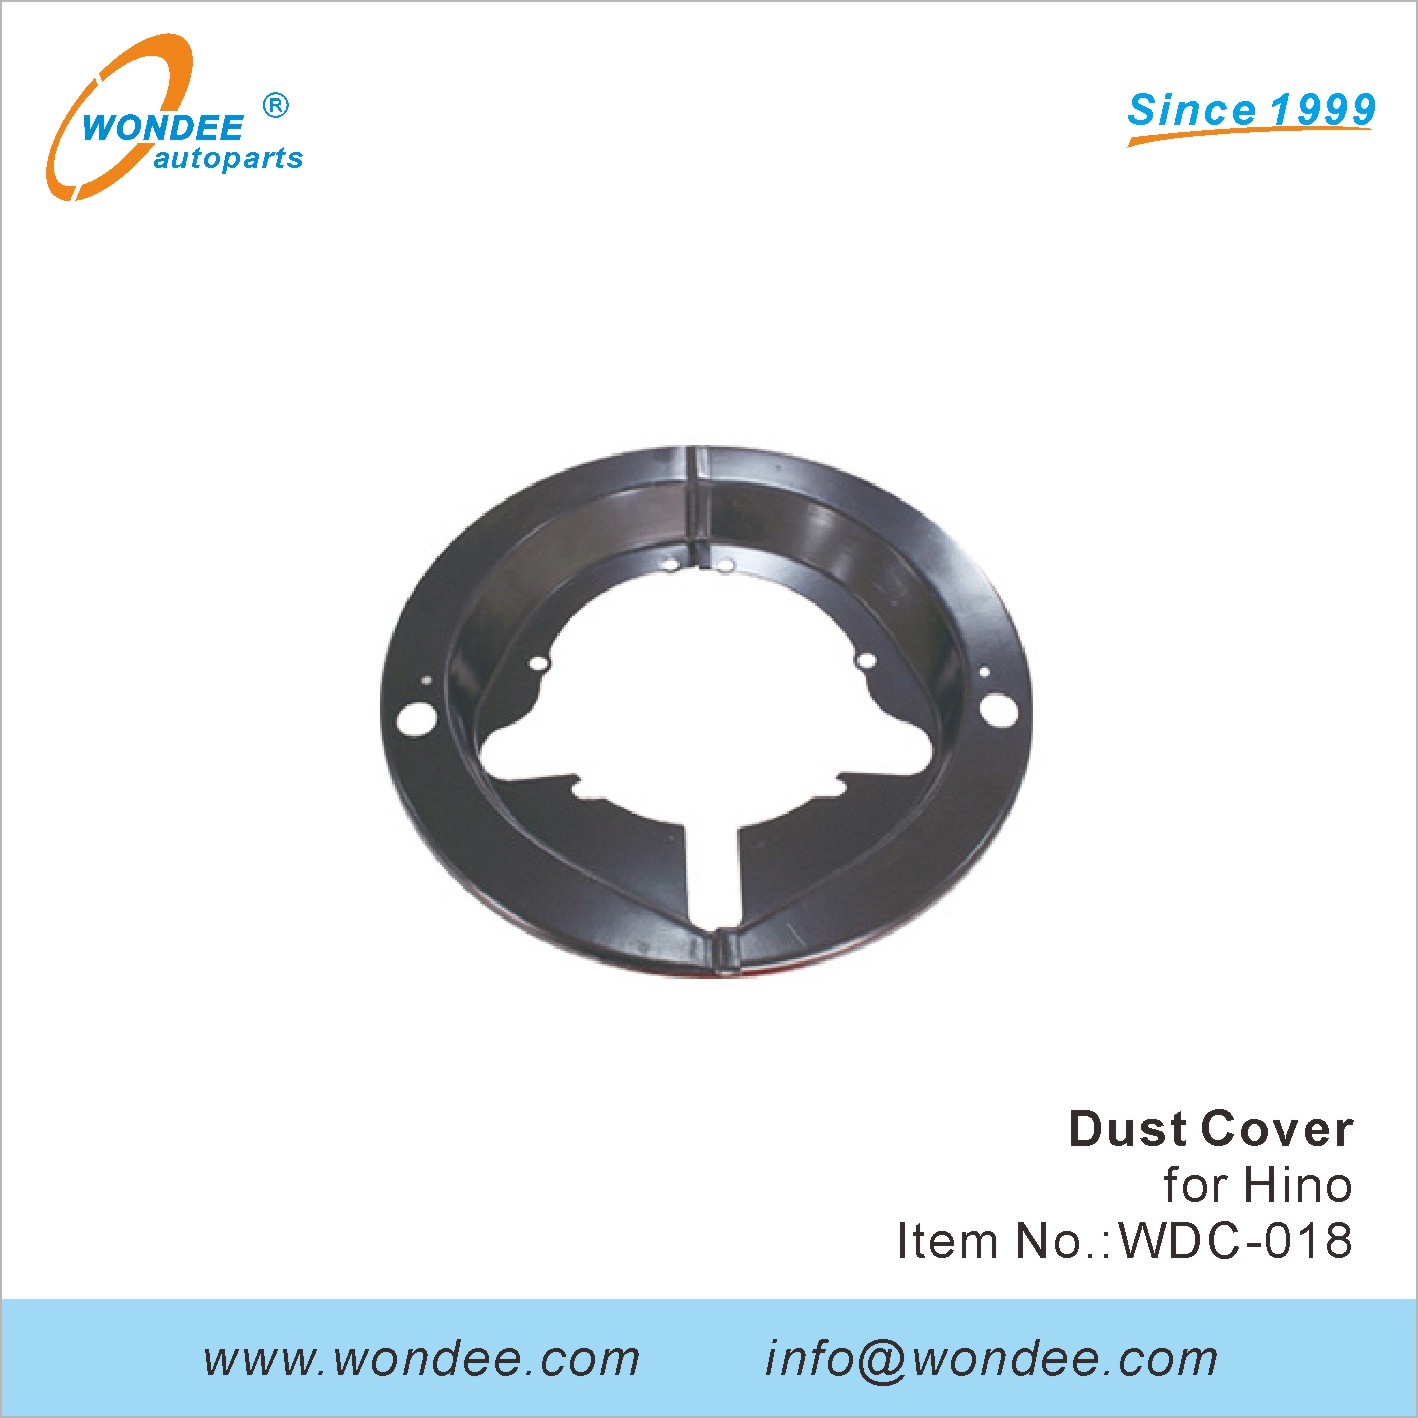 WONDEE dust cover (18)